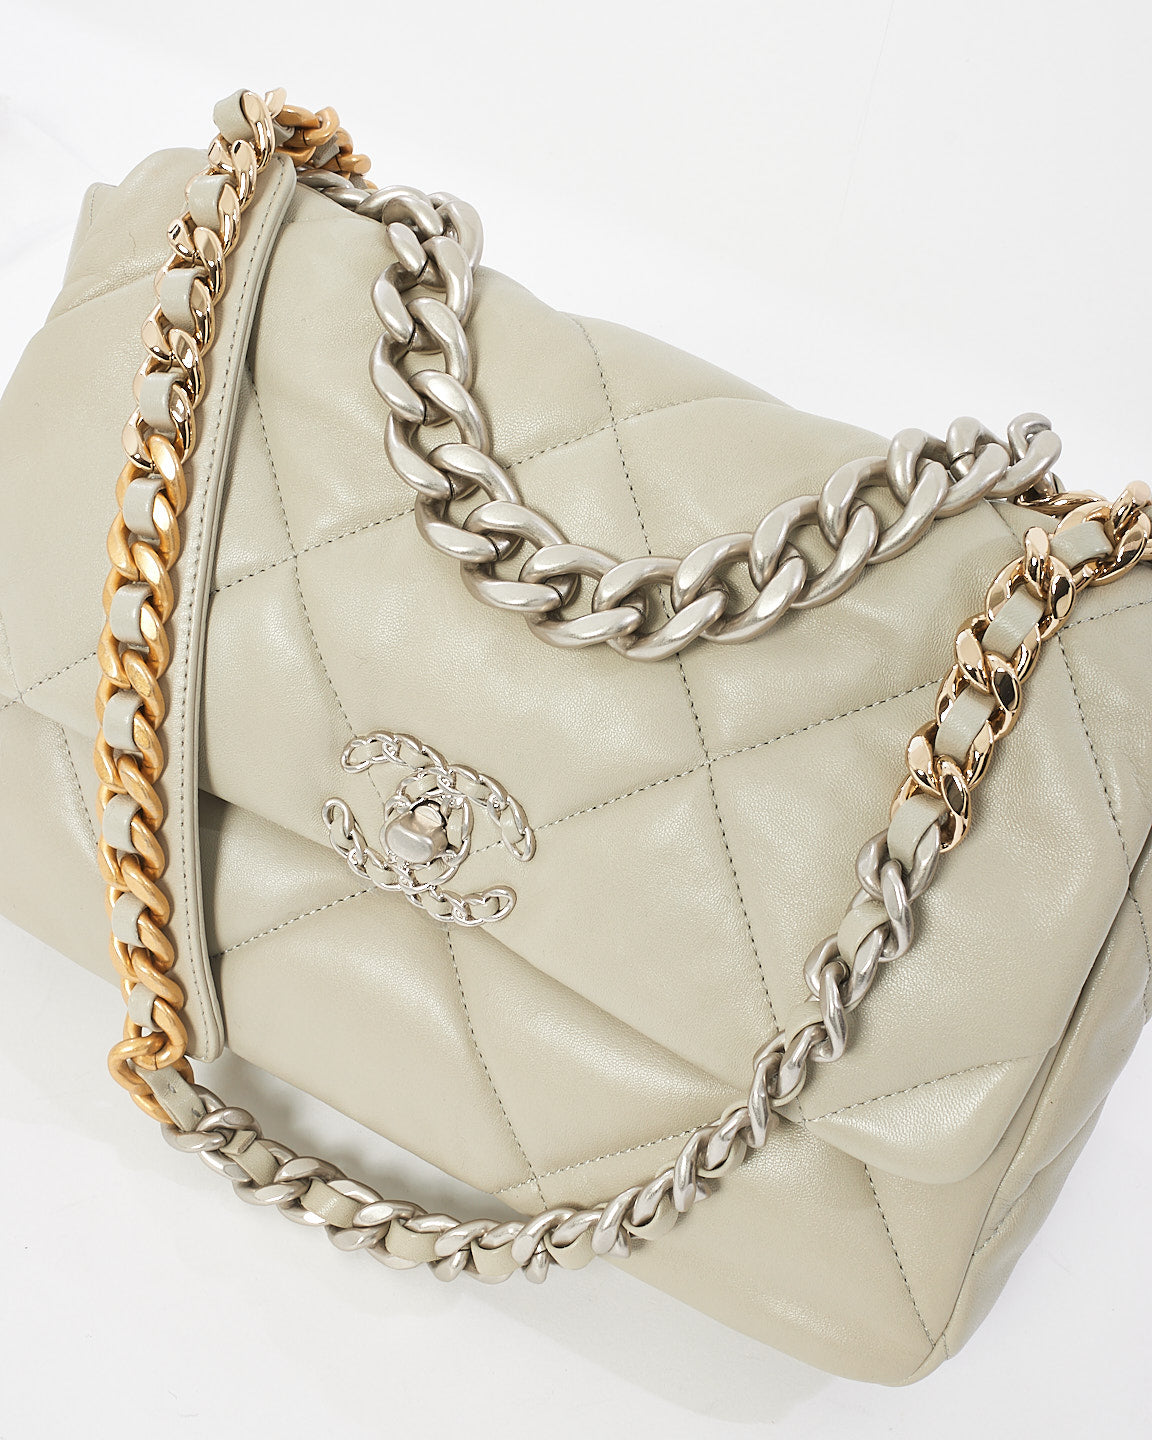 Chanel Grey Lambskin Leather Large 19 Bag